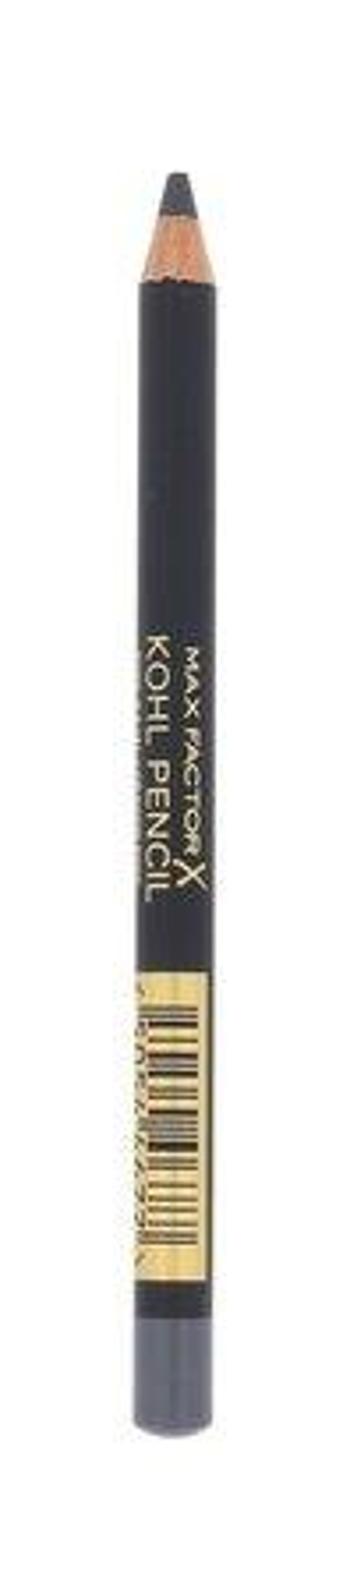 Max Factor Kohl Eye Liner Pencil (050 Charcoal Grey) 1,3 g, 1,3ml, 050, Grey